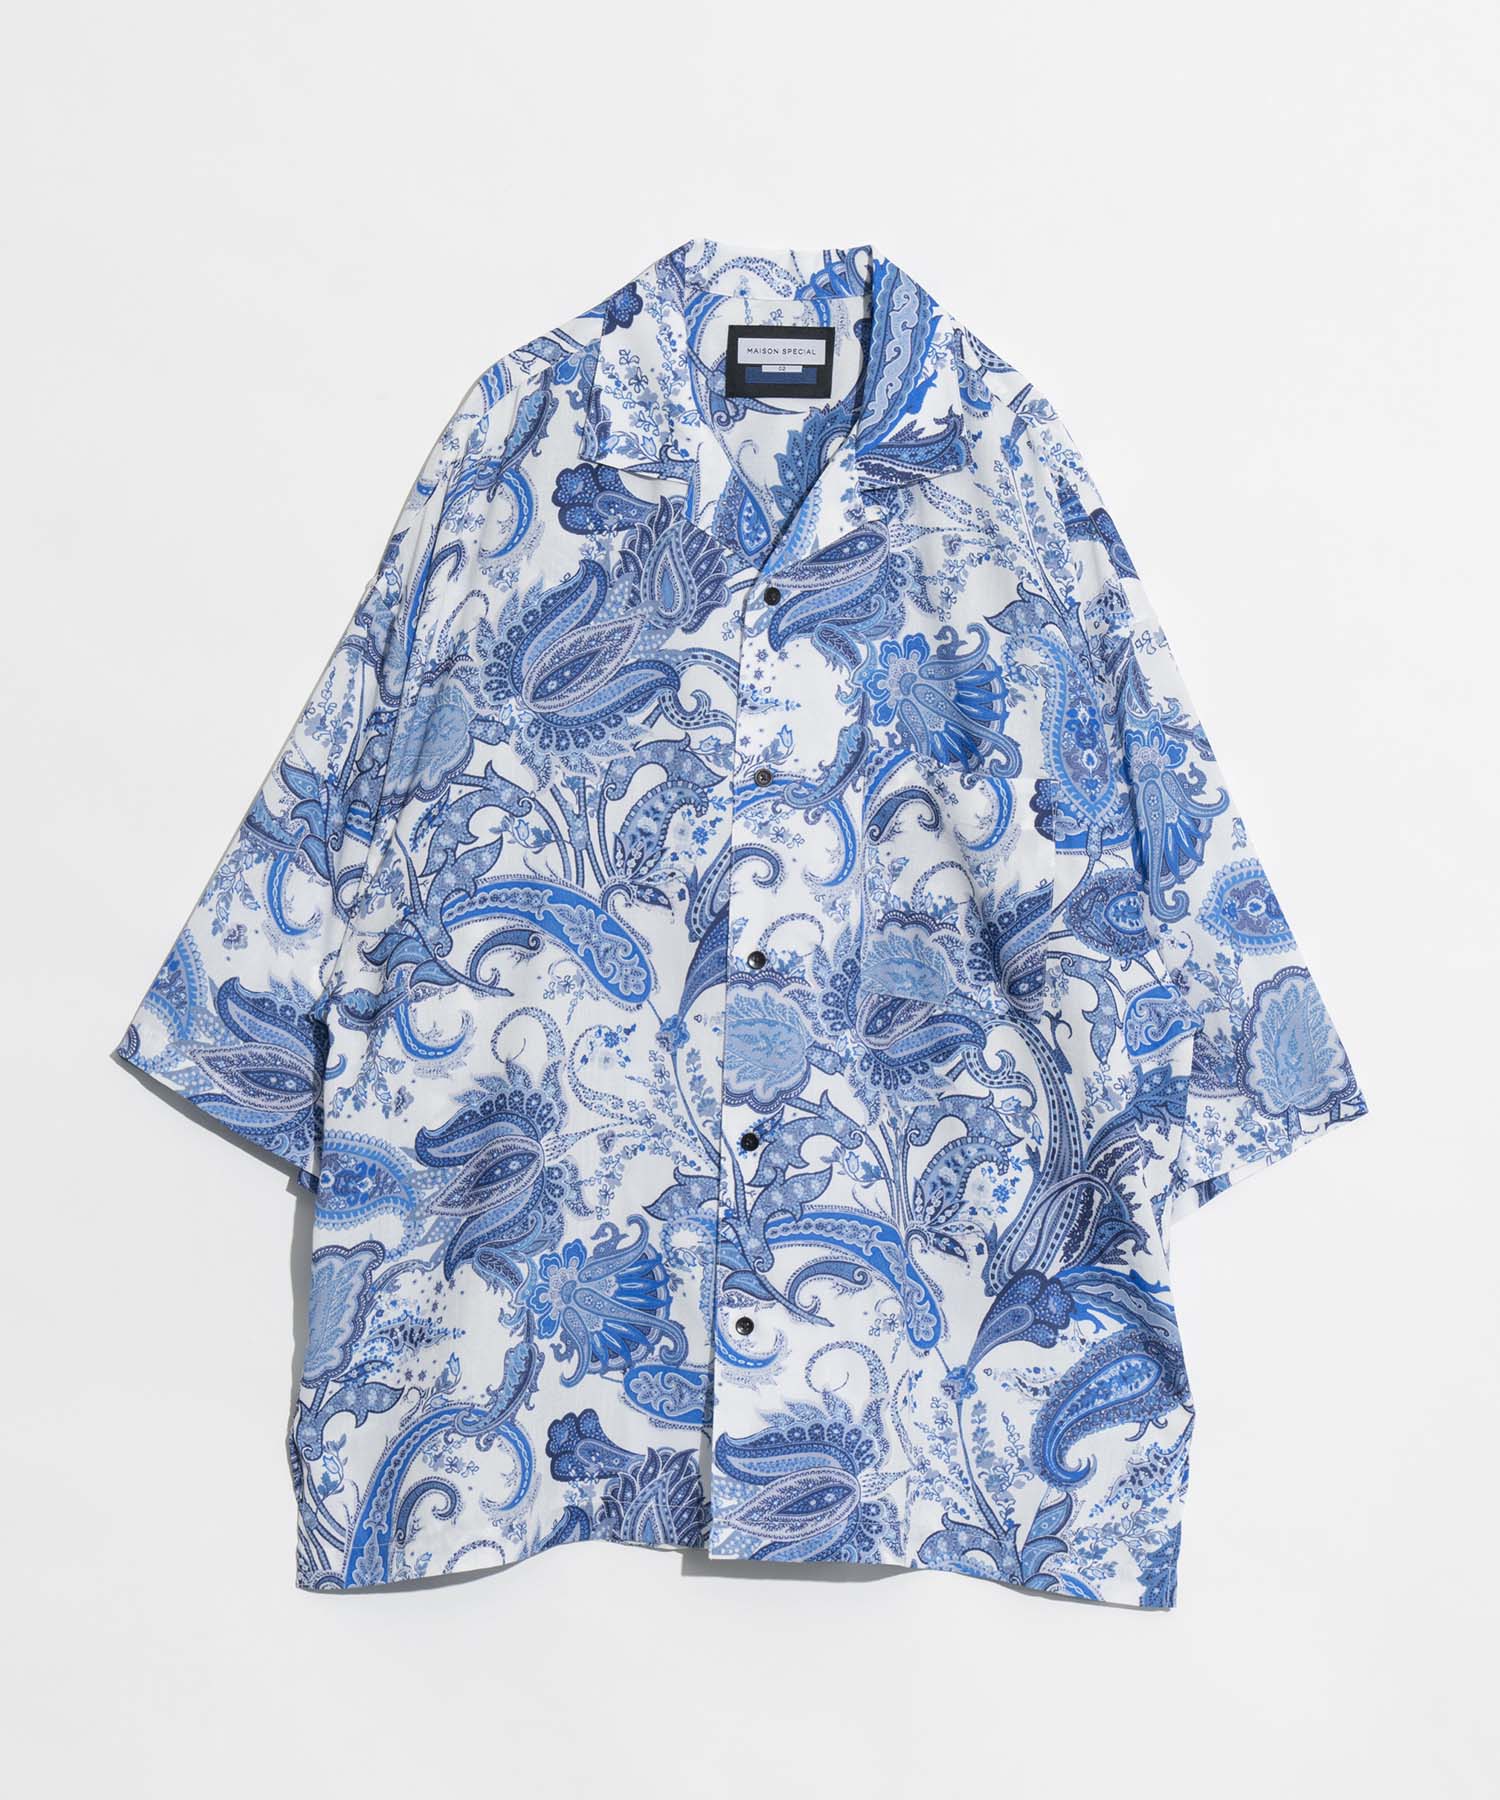 【SALE】シアープリントプライムオーバーオープンカラーショートスリーブシャツ